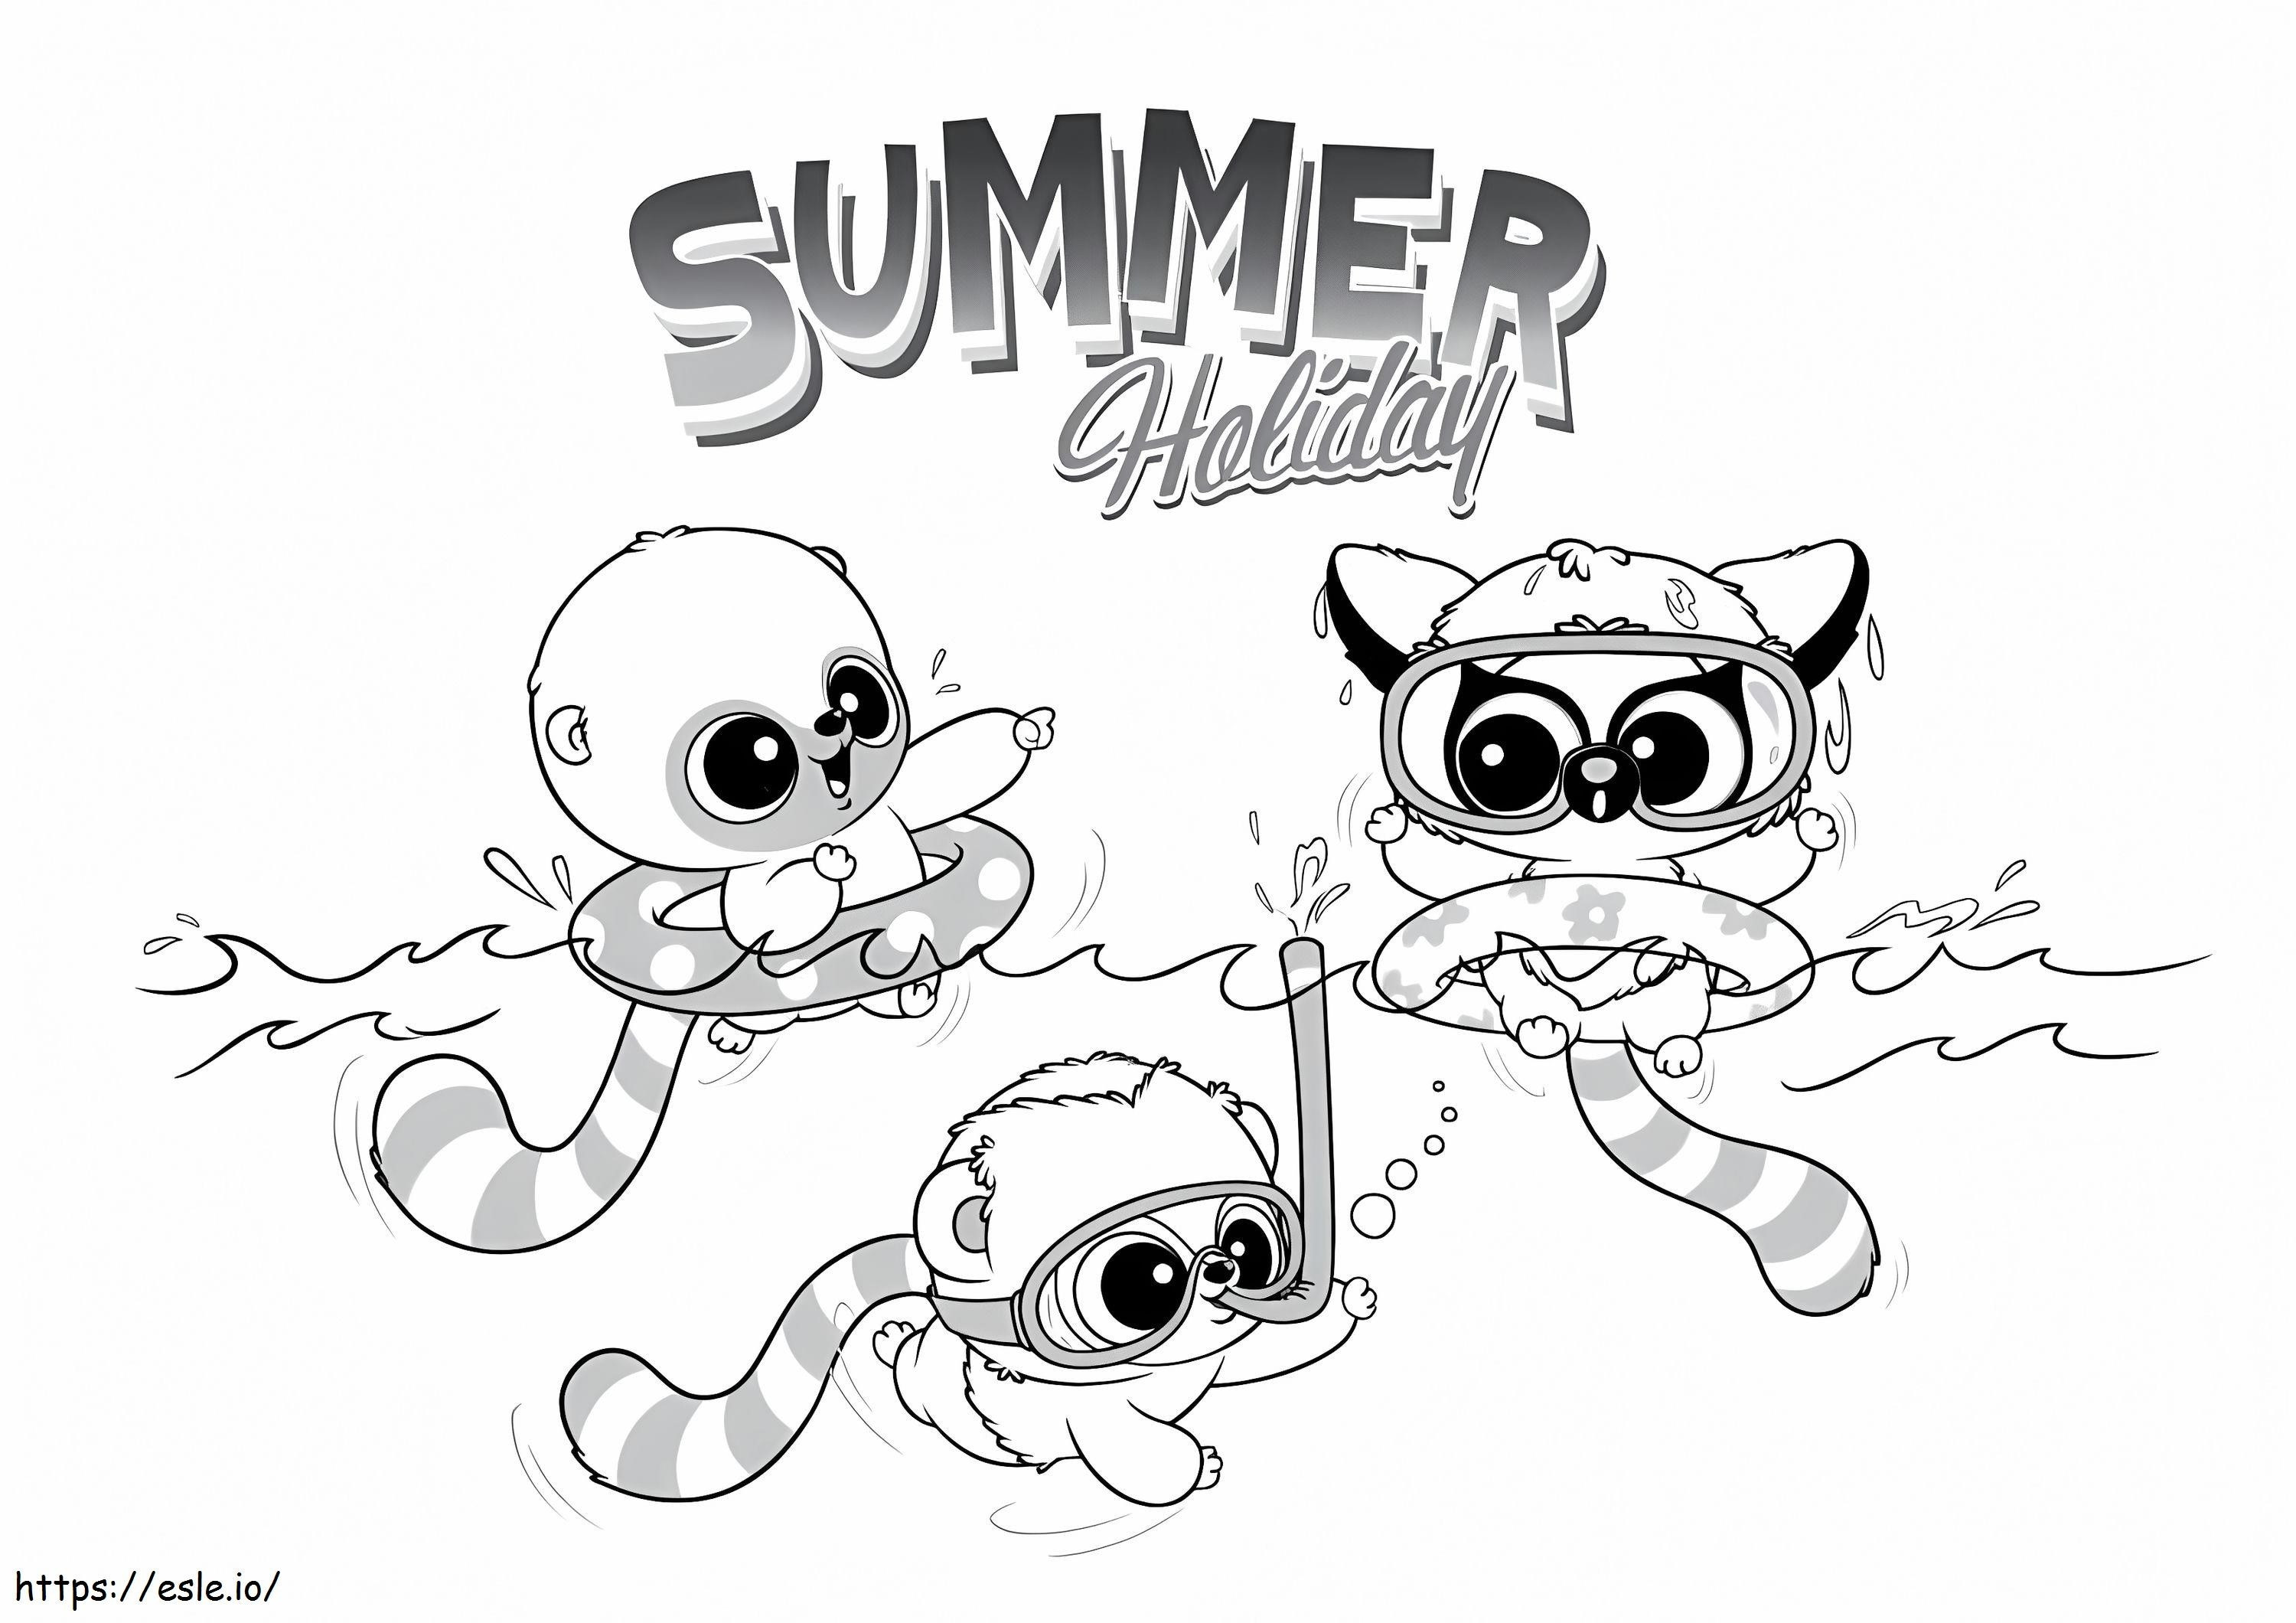 YooHoo And Friends Summer Holiday coloring page